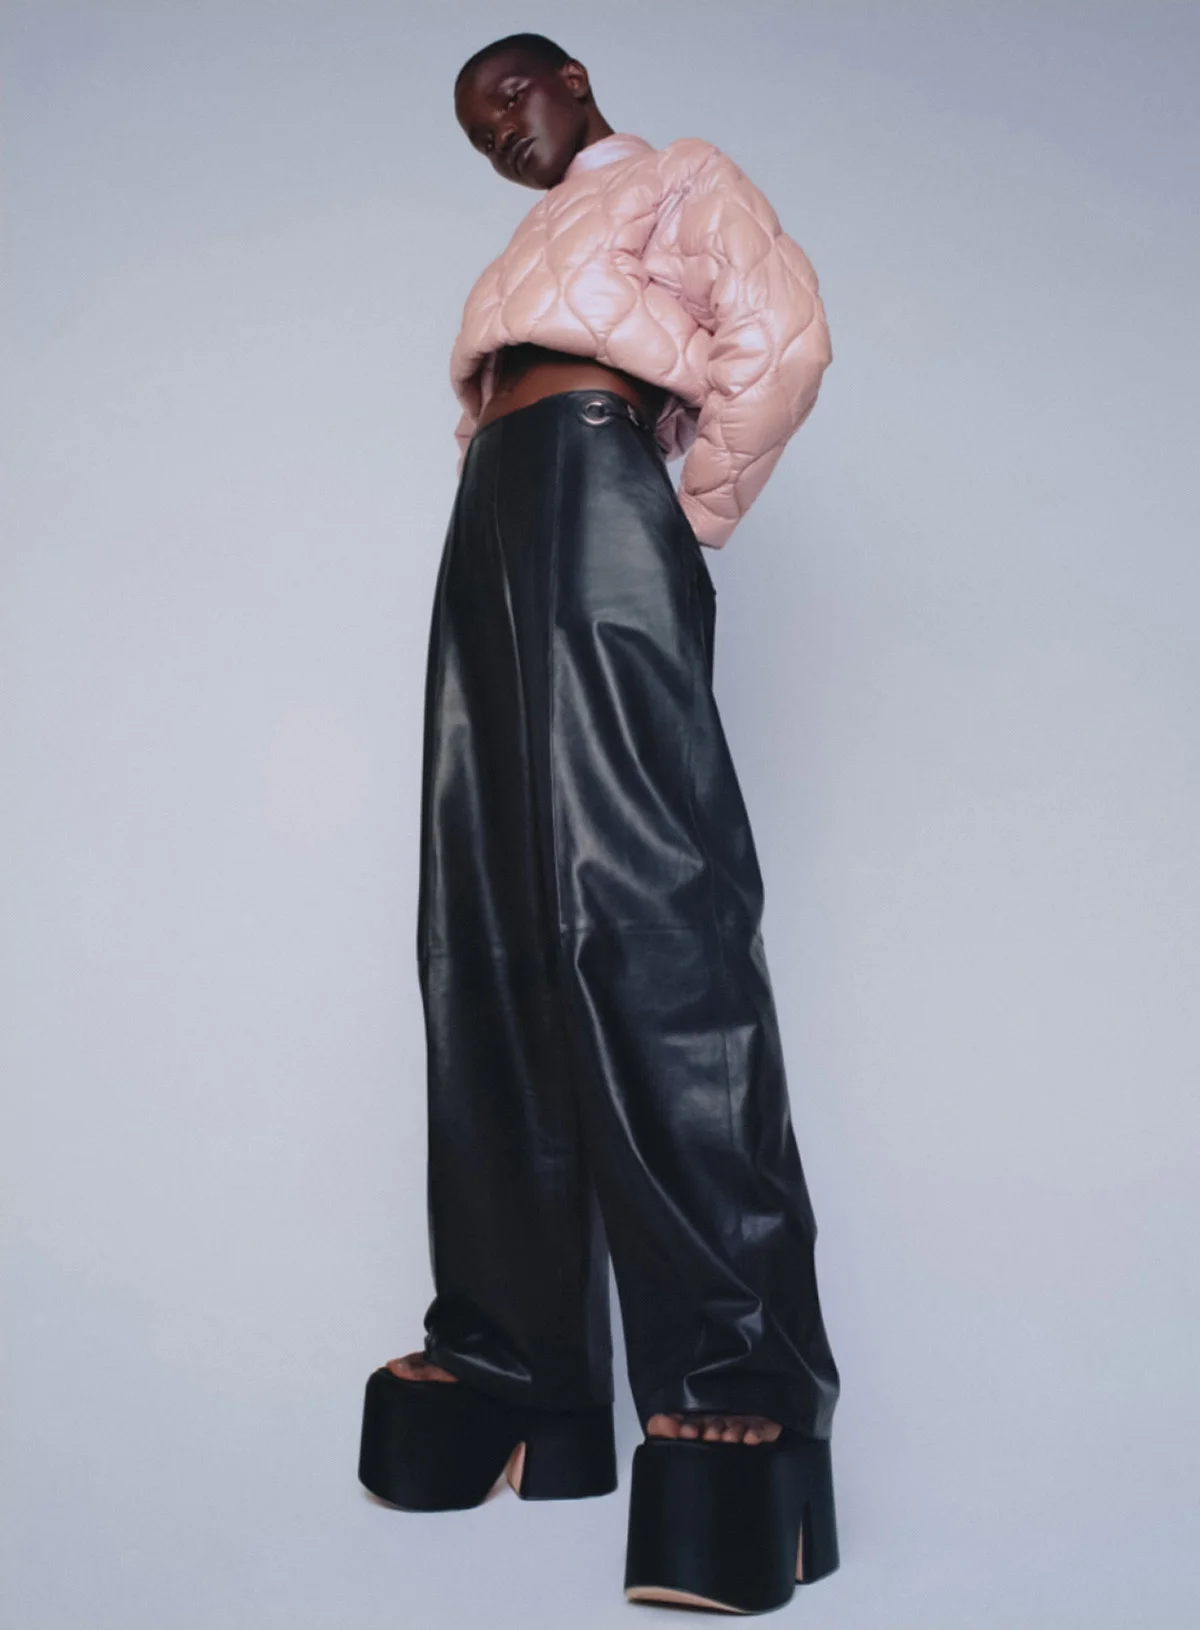 Akon Changkou covers Vogue France April 2022 by Anthony Seklaoui